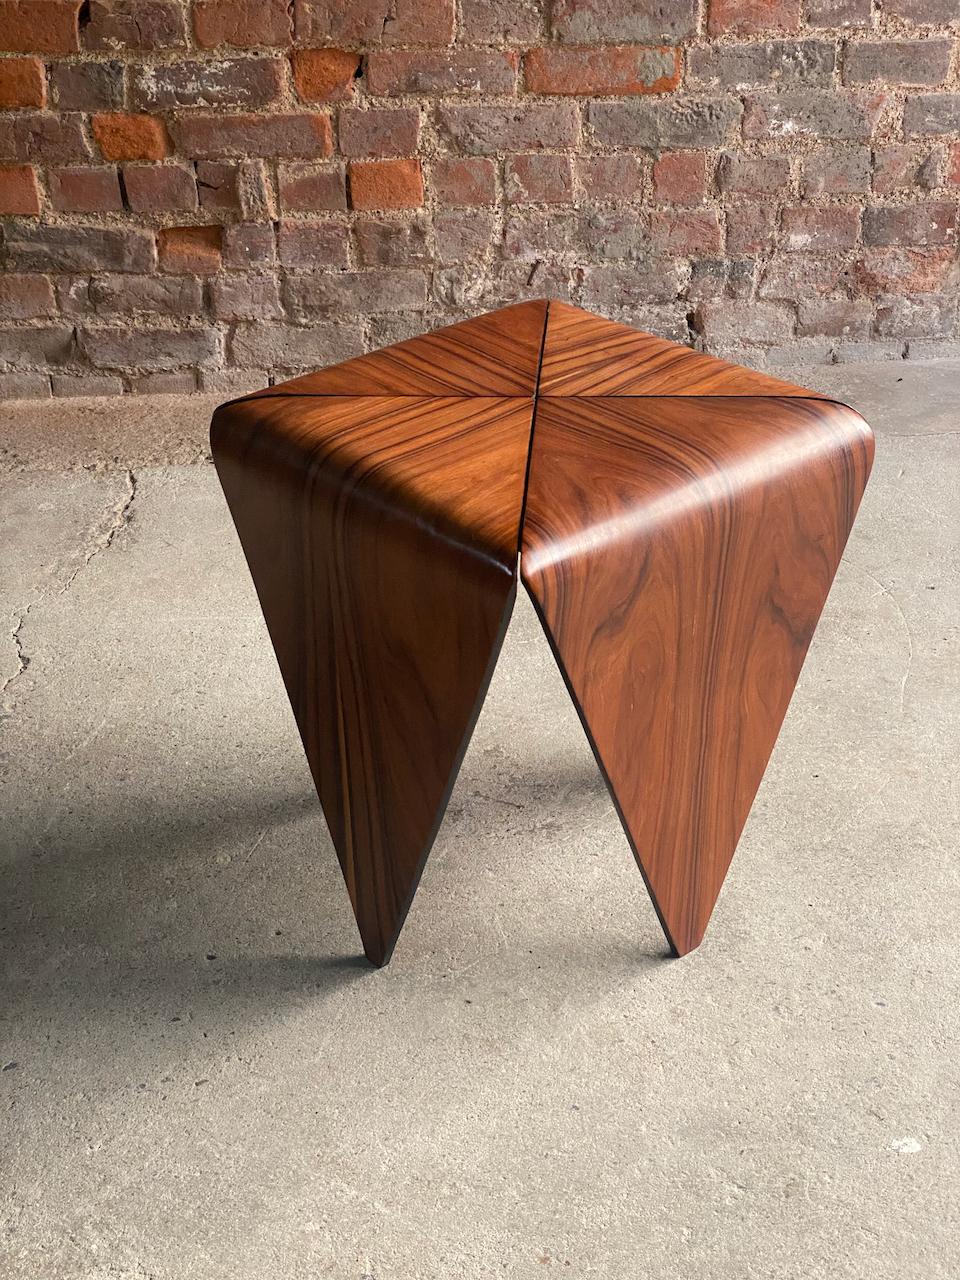 Wood Jorge Zalszupin Petalas Side Table by L' Atelier circa 1960